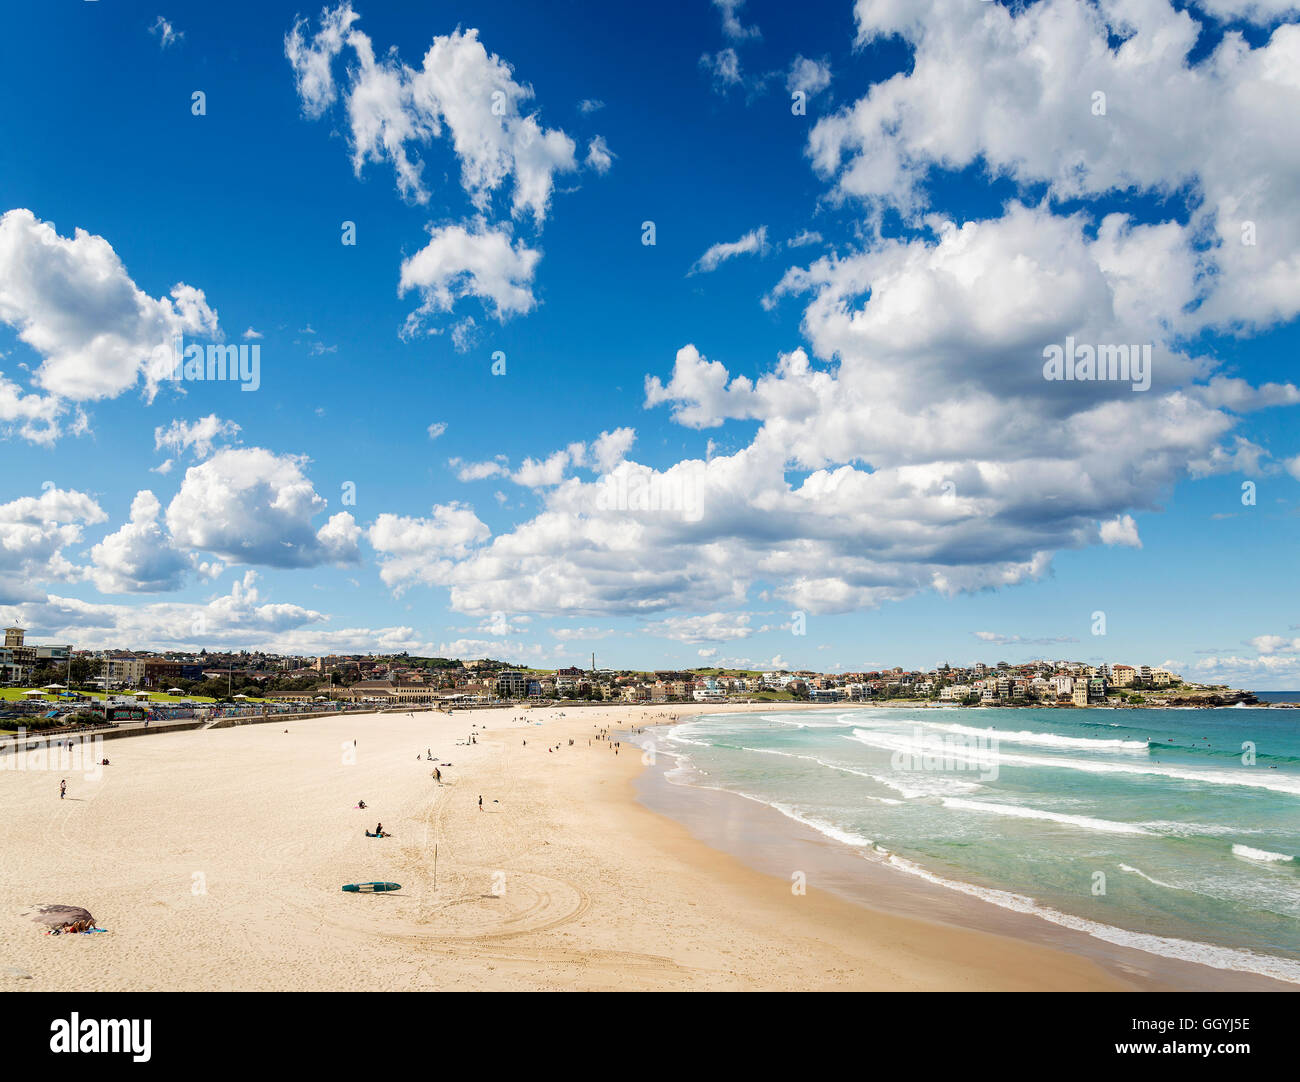 sunny day view of famous bondi beach in sydney australia Stock Photo